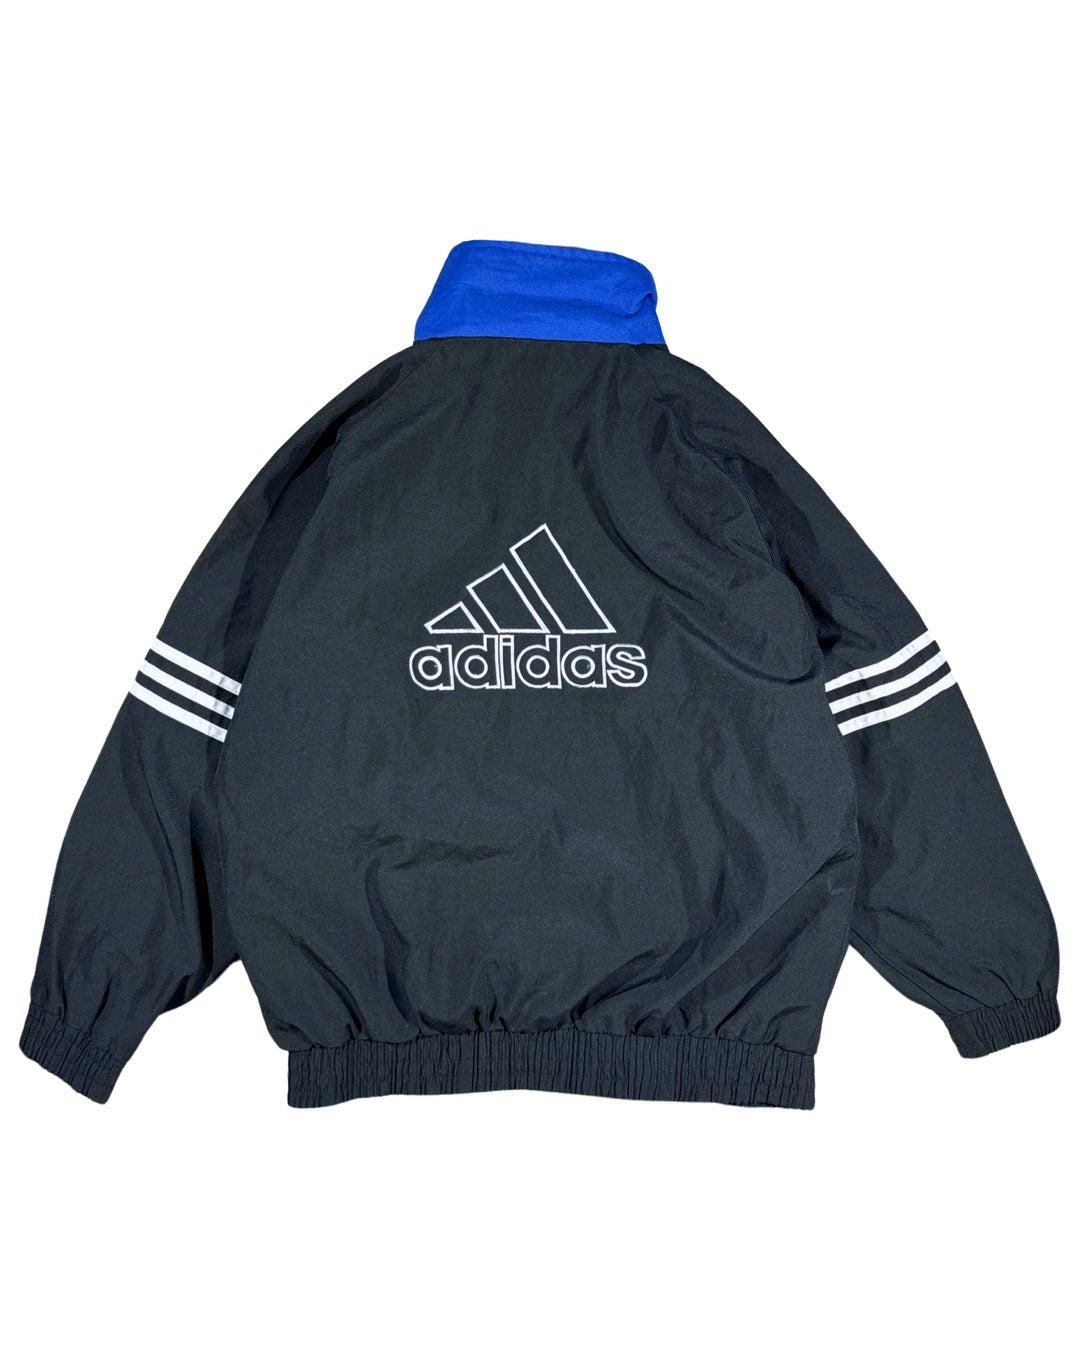 Vintage Adidas Sports Jacket - XS